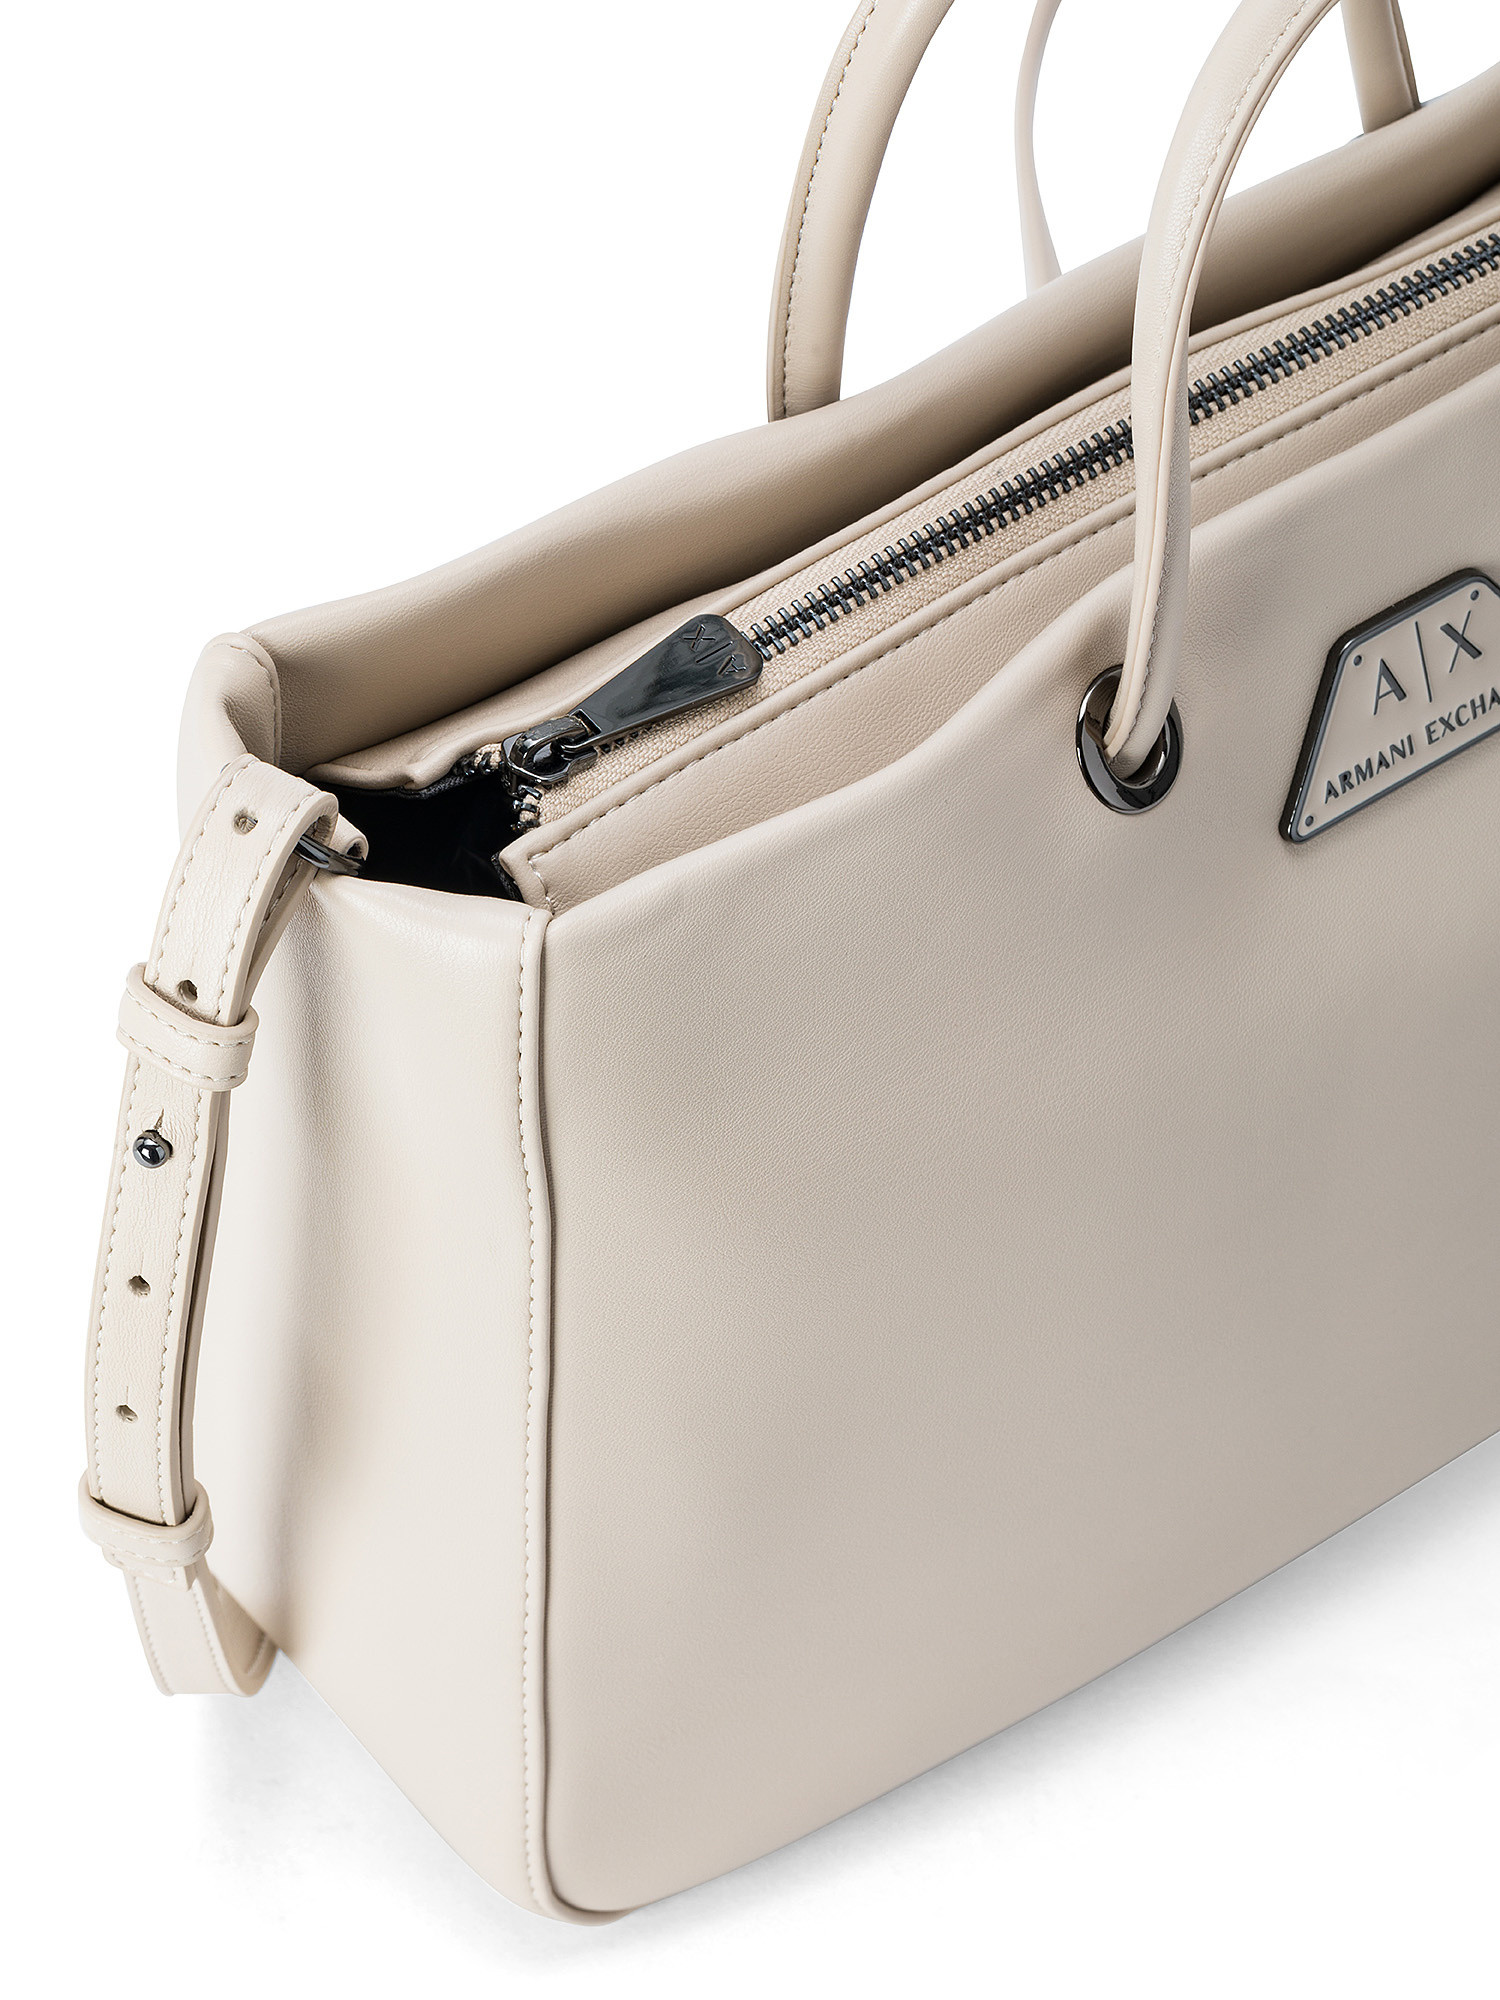 Armani Exchange - Handbag with logo, Beige, large image number 2